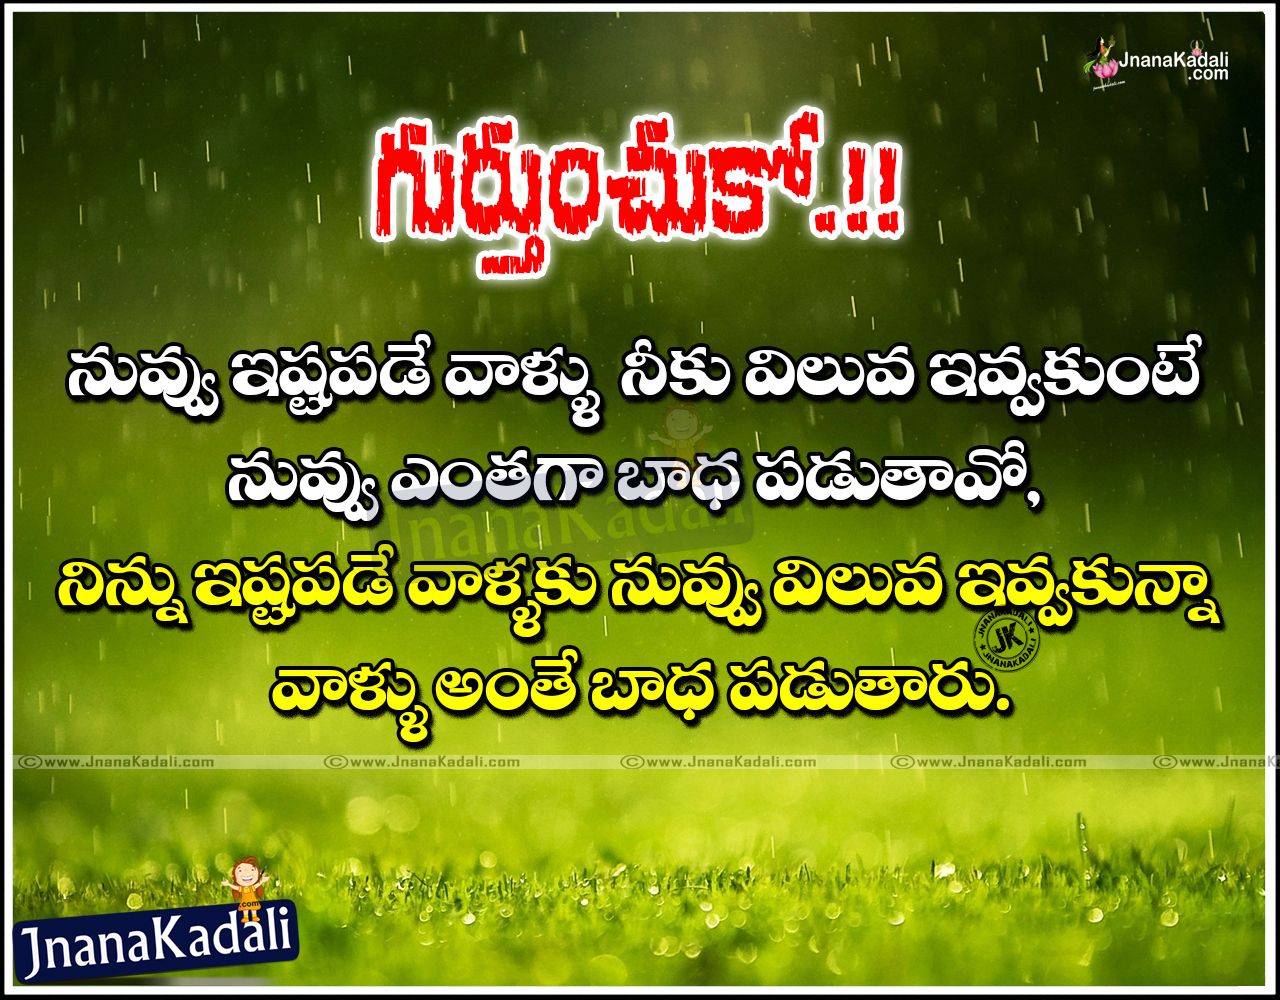 March 2021 JNANA KADALI COM Telugu Quotes English  